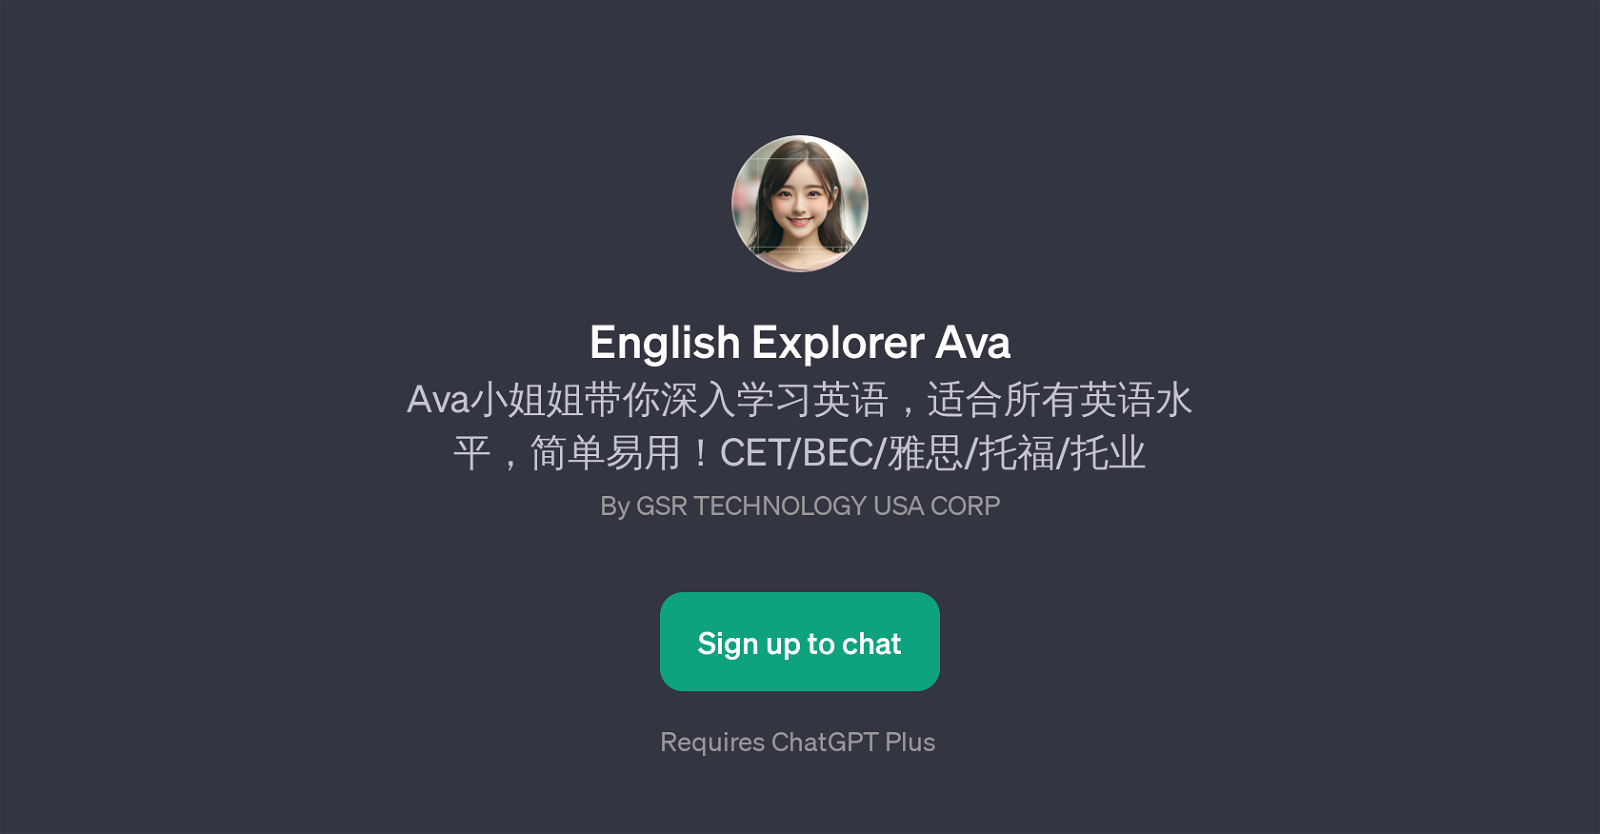 English Explorer Ava website